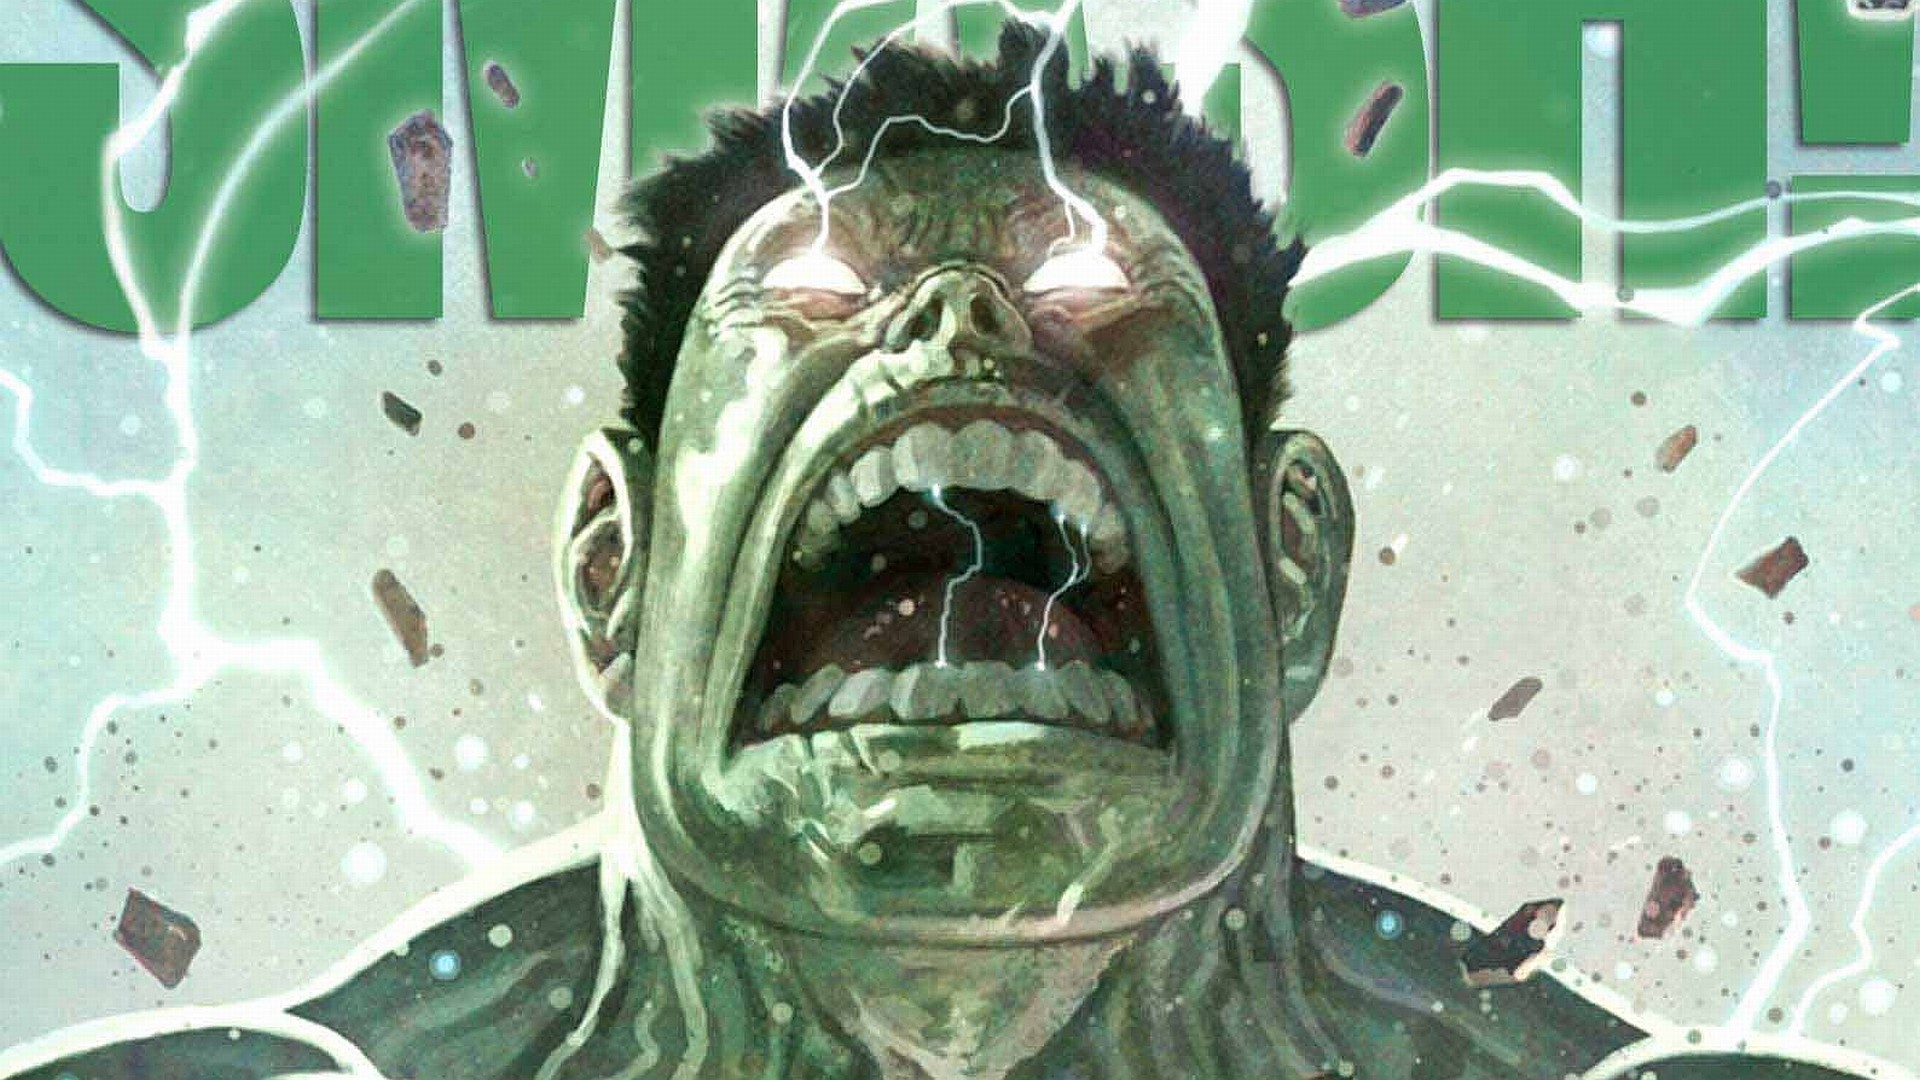 1920x1080 The Hulk Screaming Wallpaper